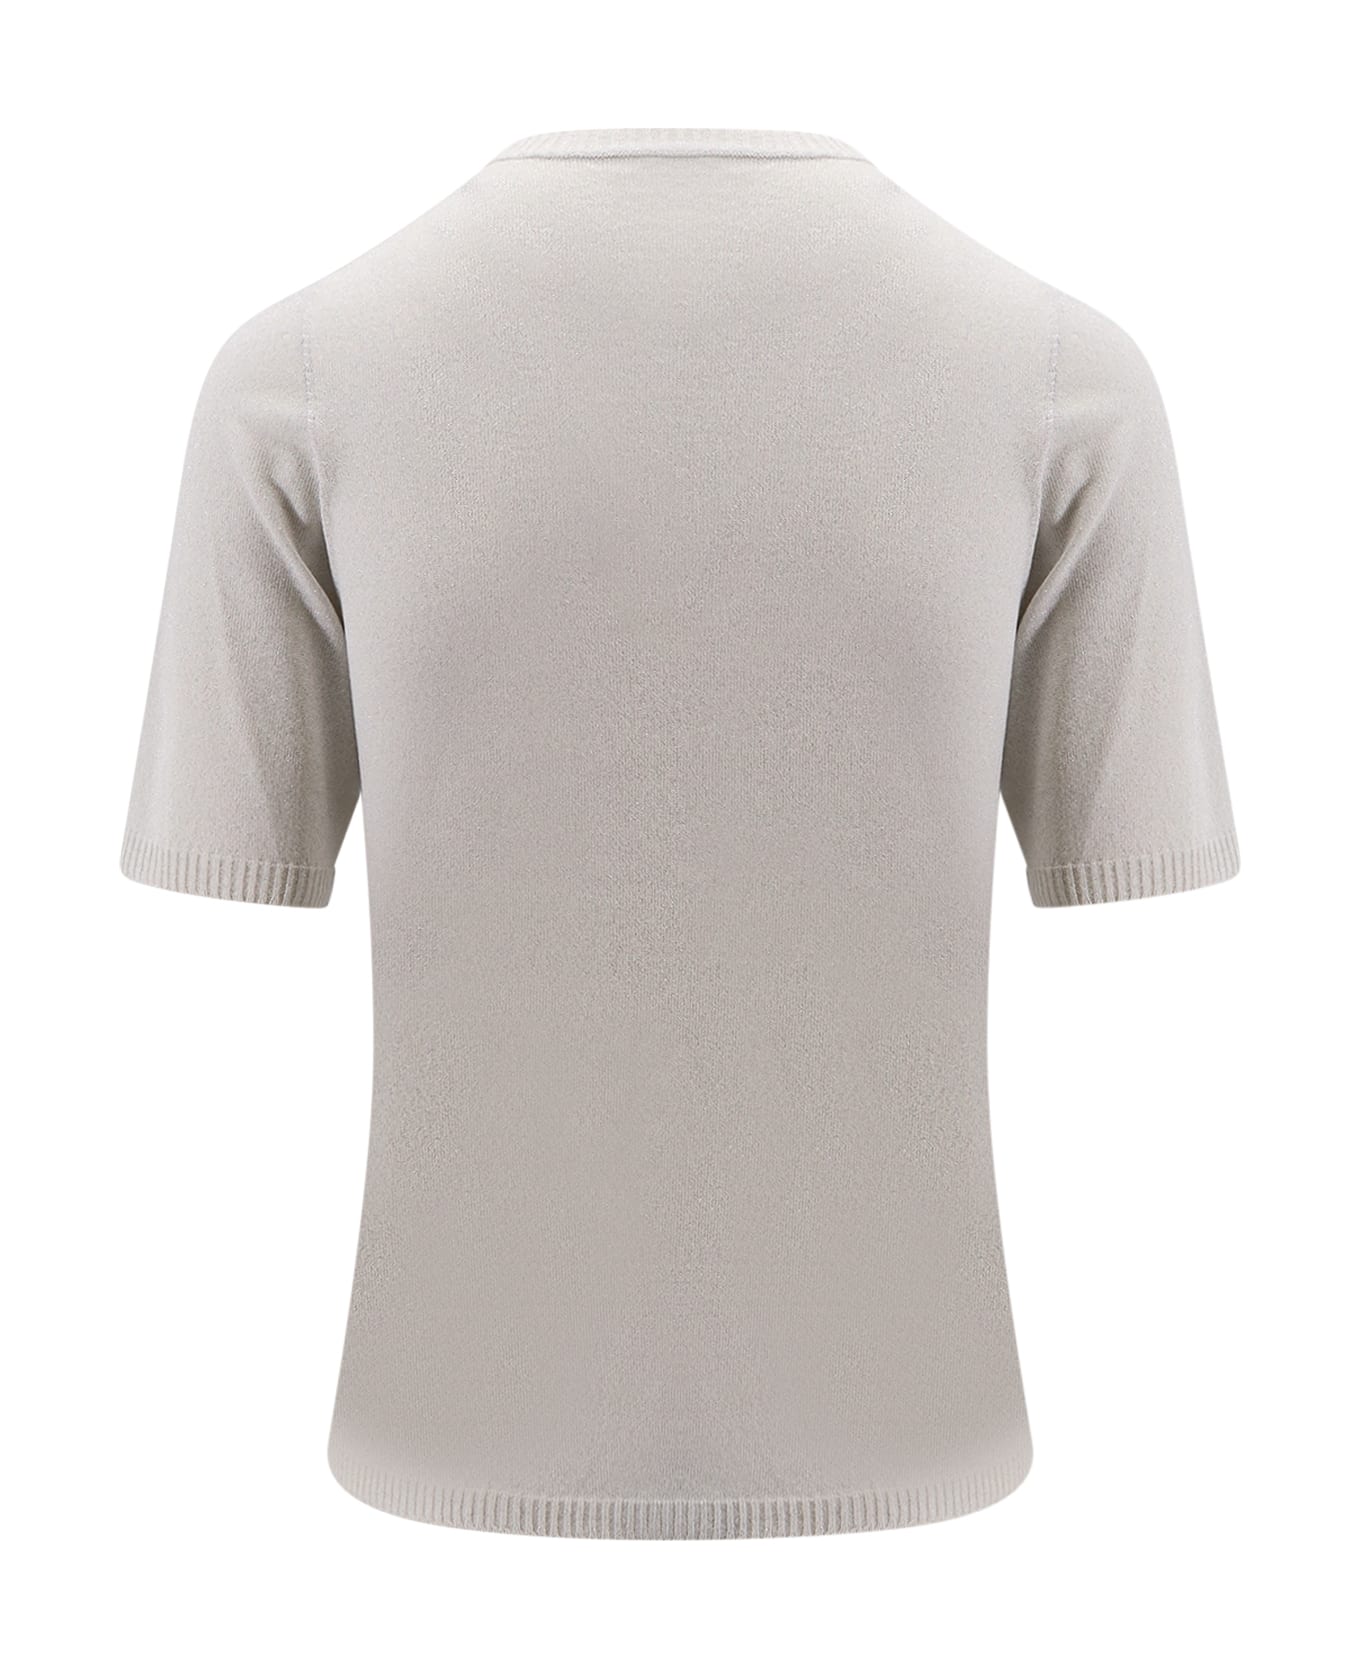 Lardini Top - White Tシャツ